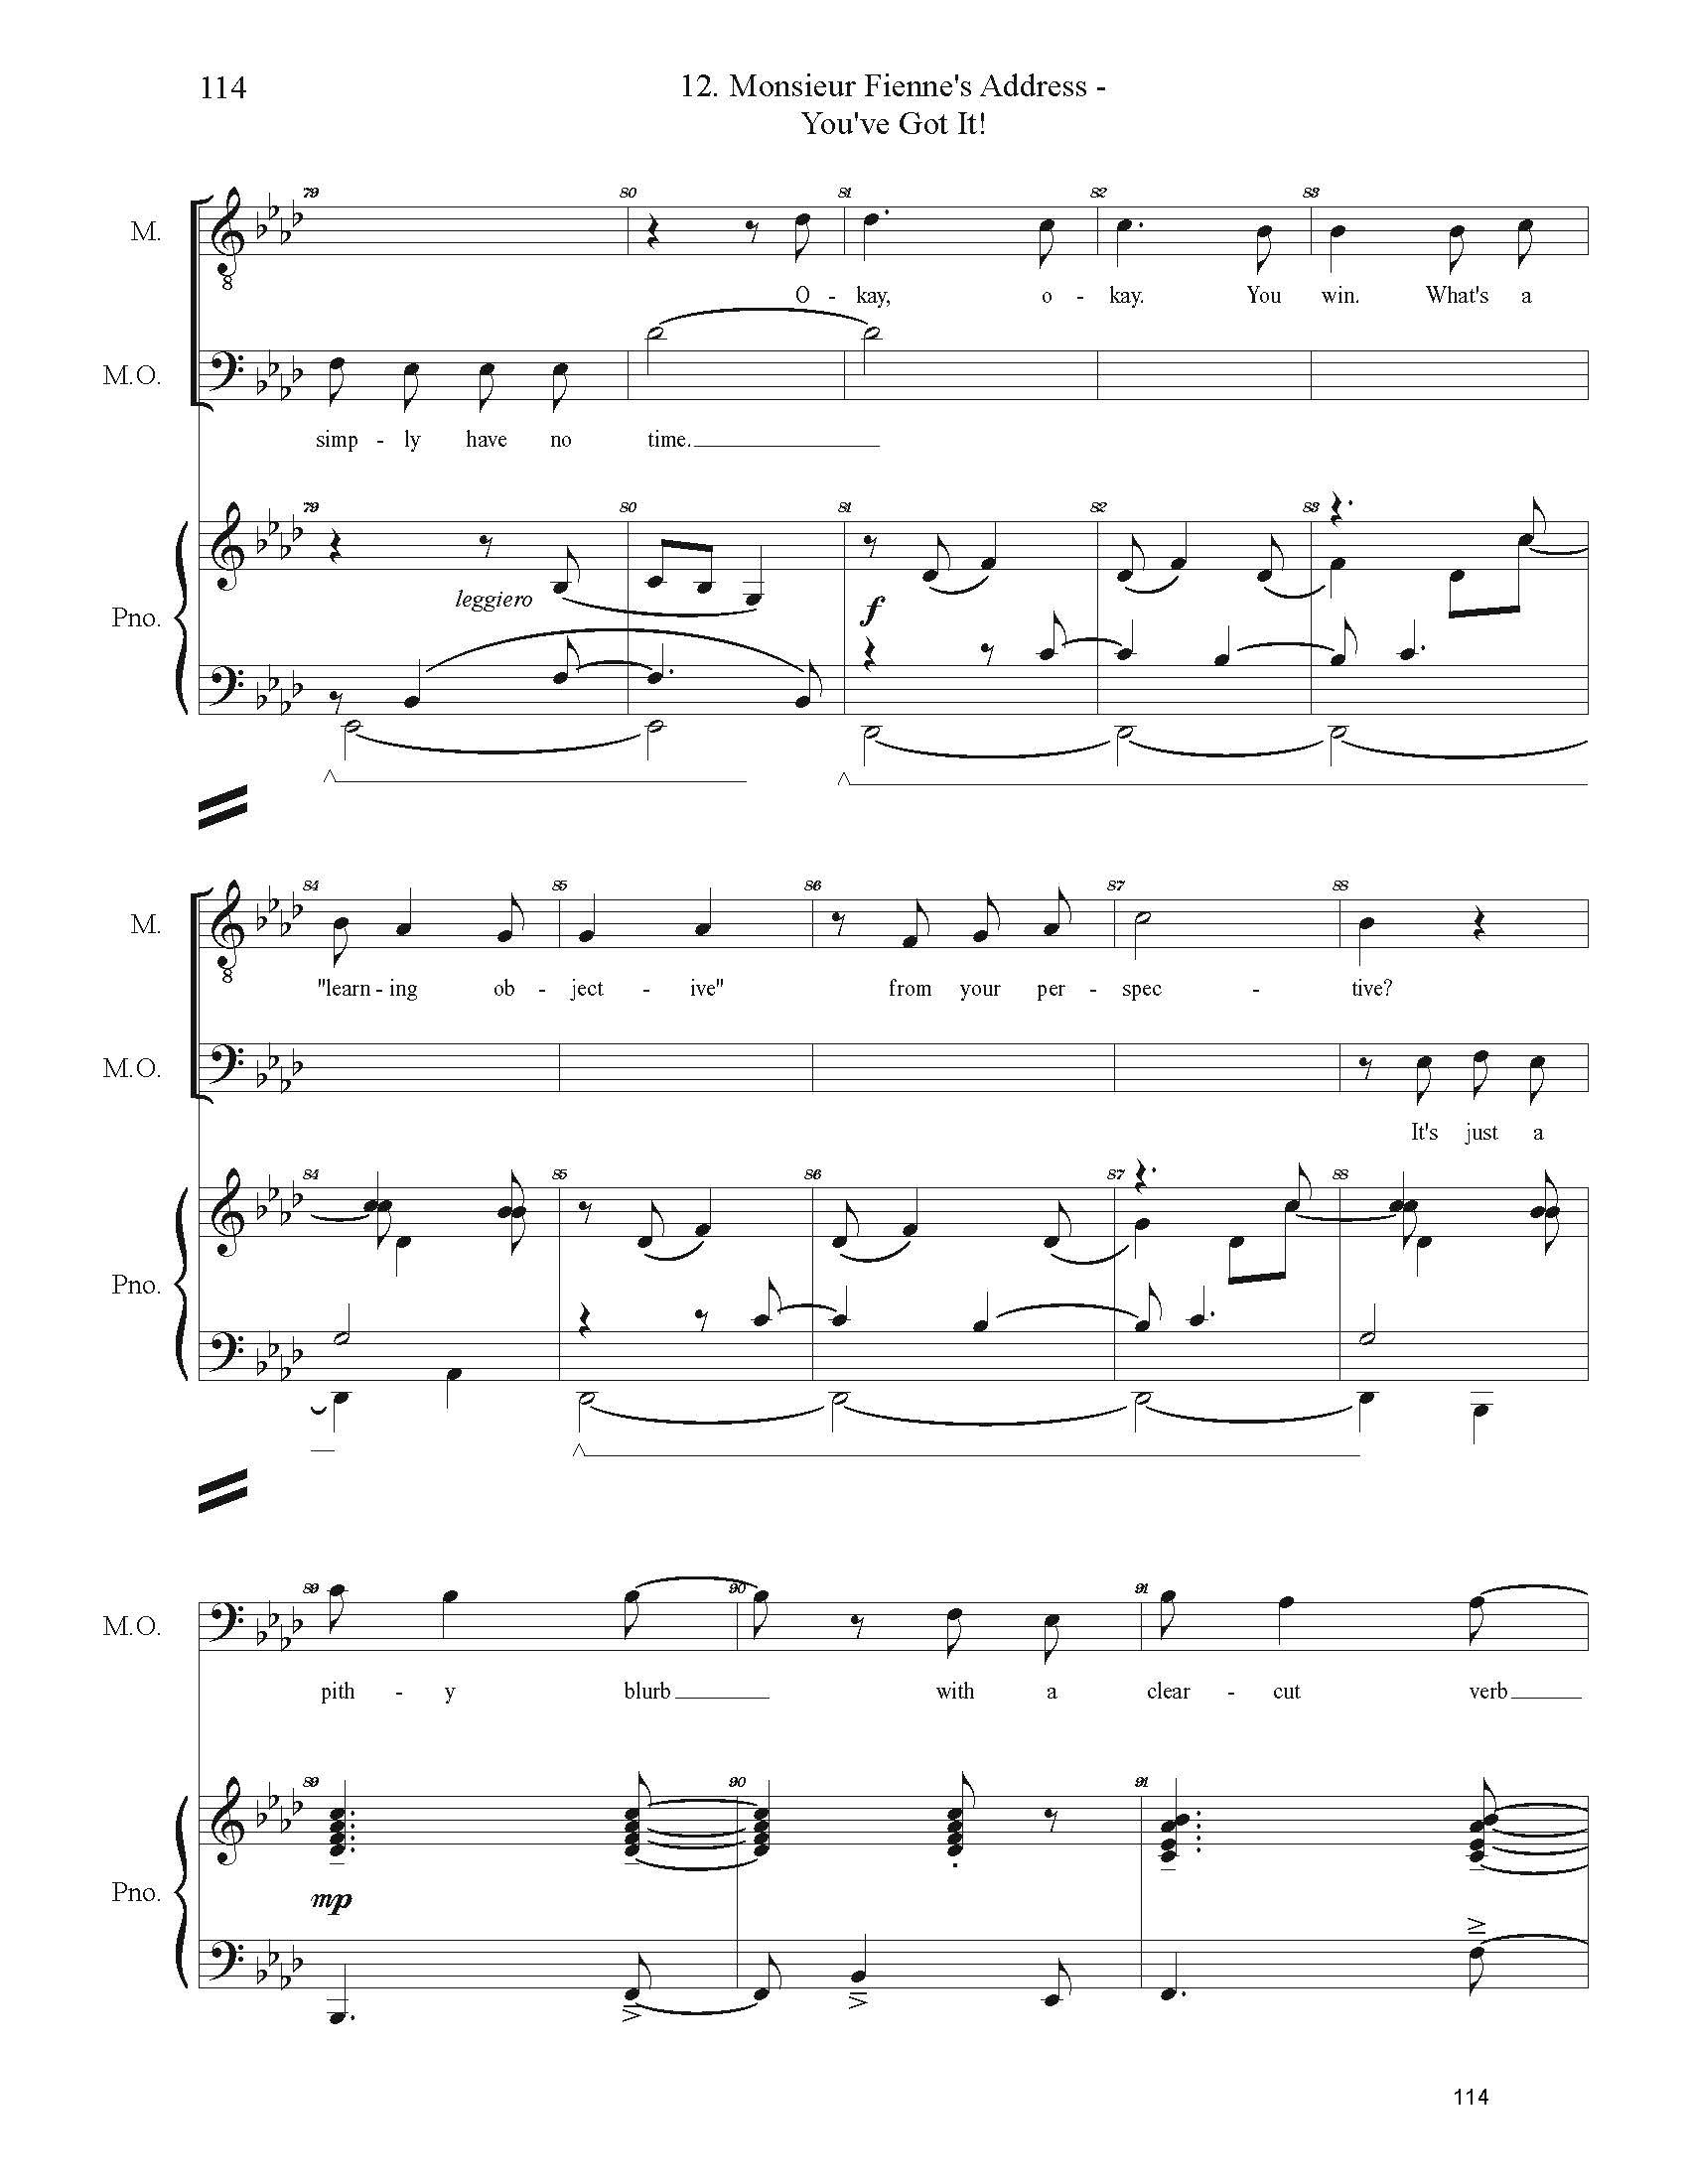 FULL PIANO VOCAL SCORE DRAFT 1 - Score_Page_114.jpg